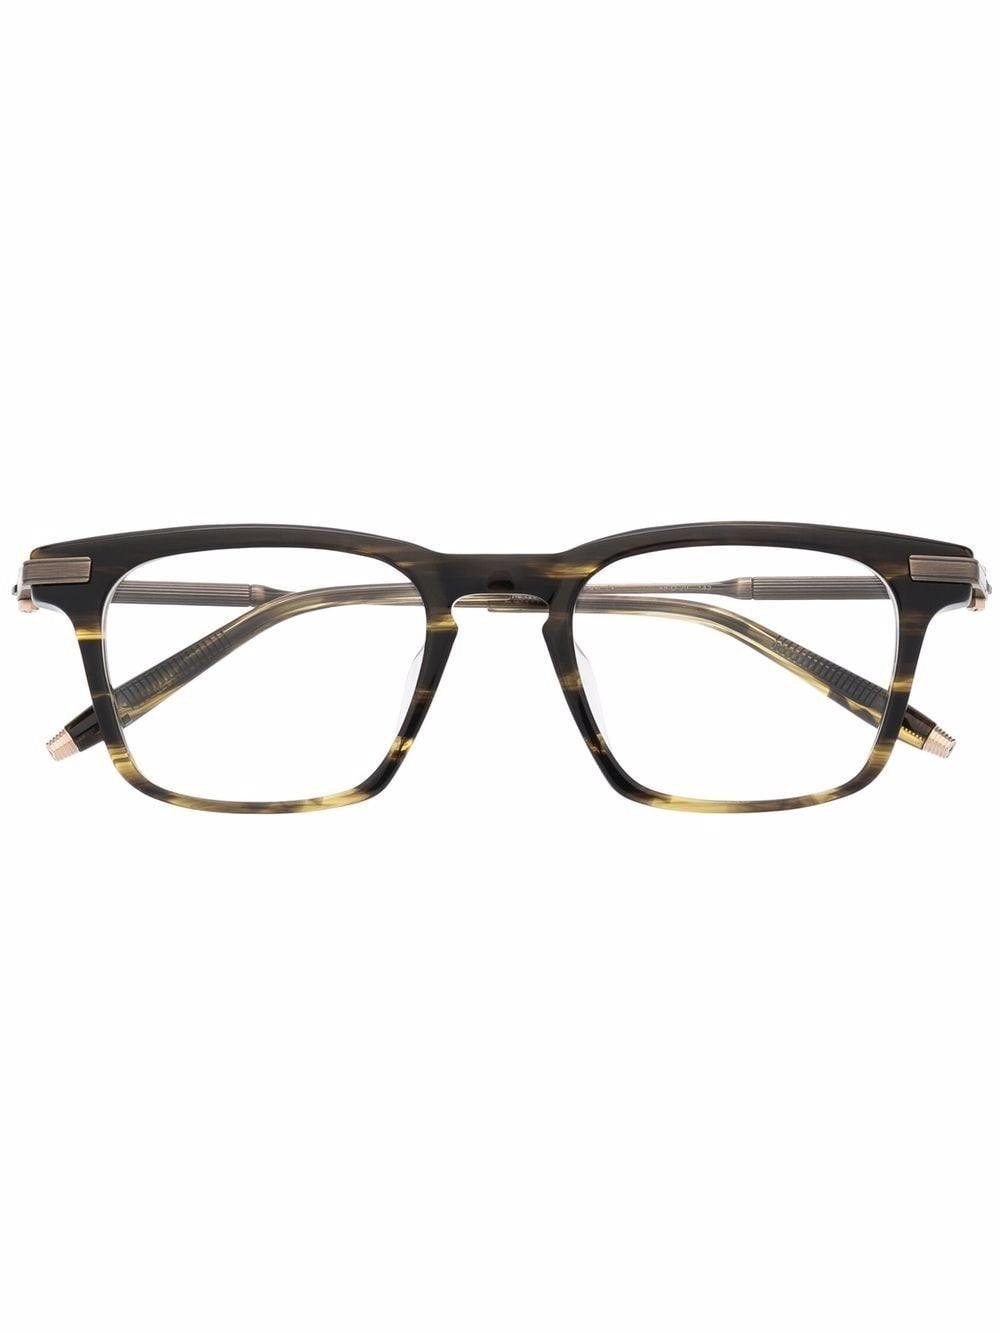 AKONI AKX400 Acetate / Titanium Glasses & Frames - André Opticas